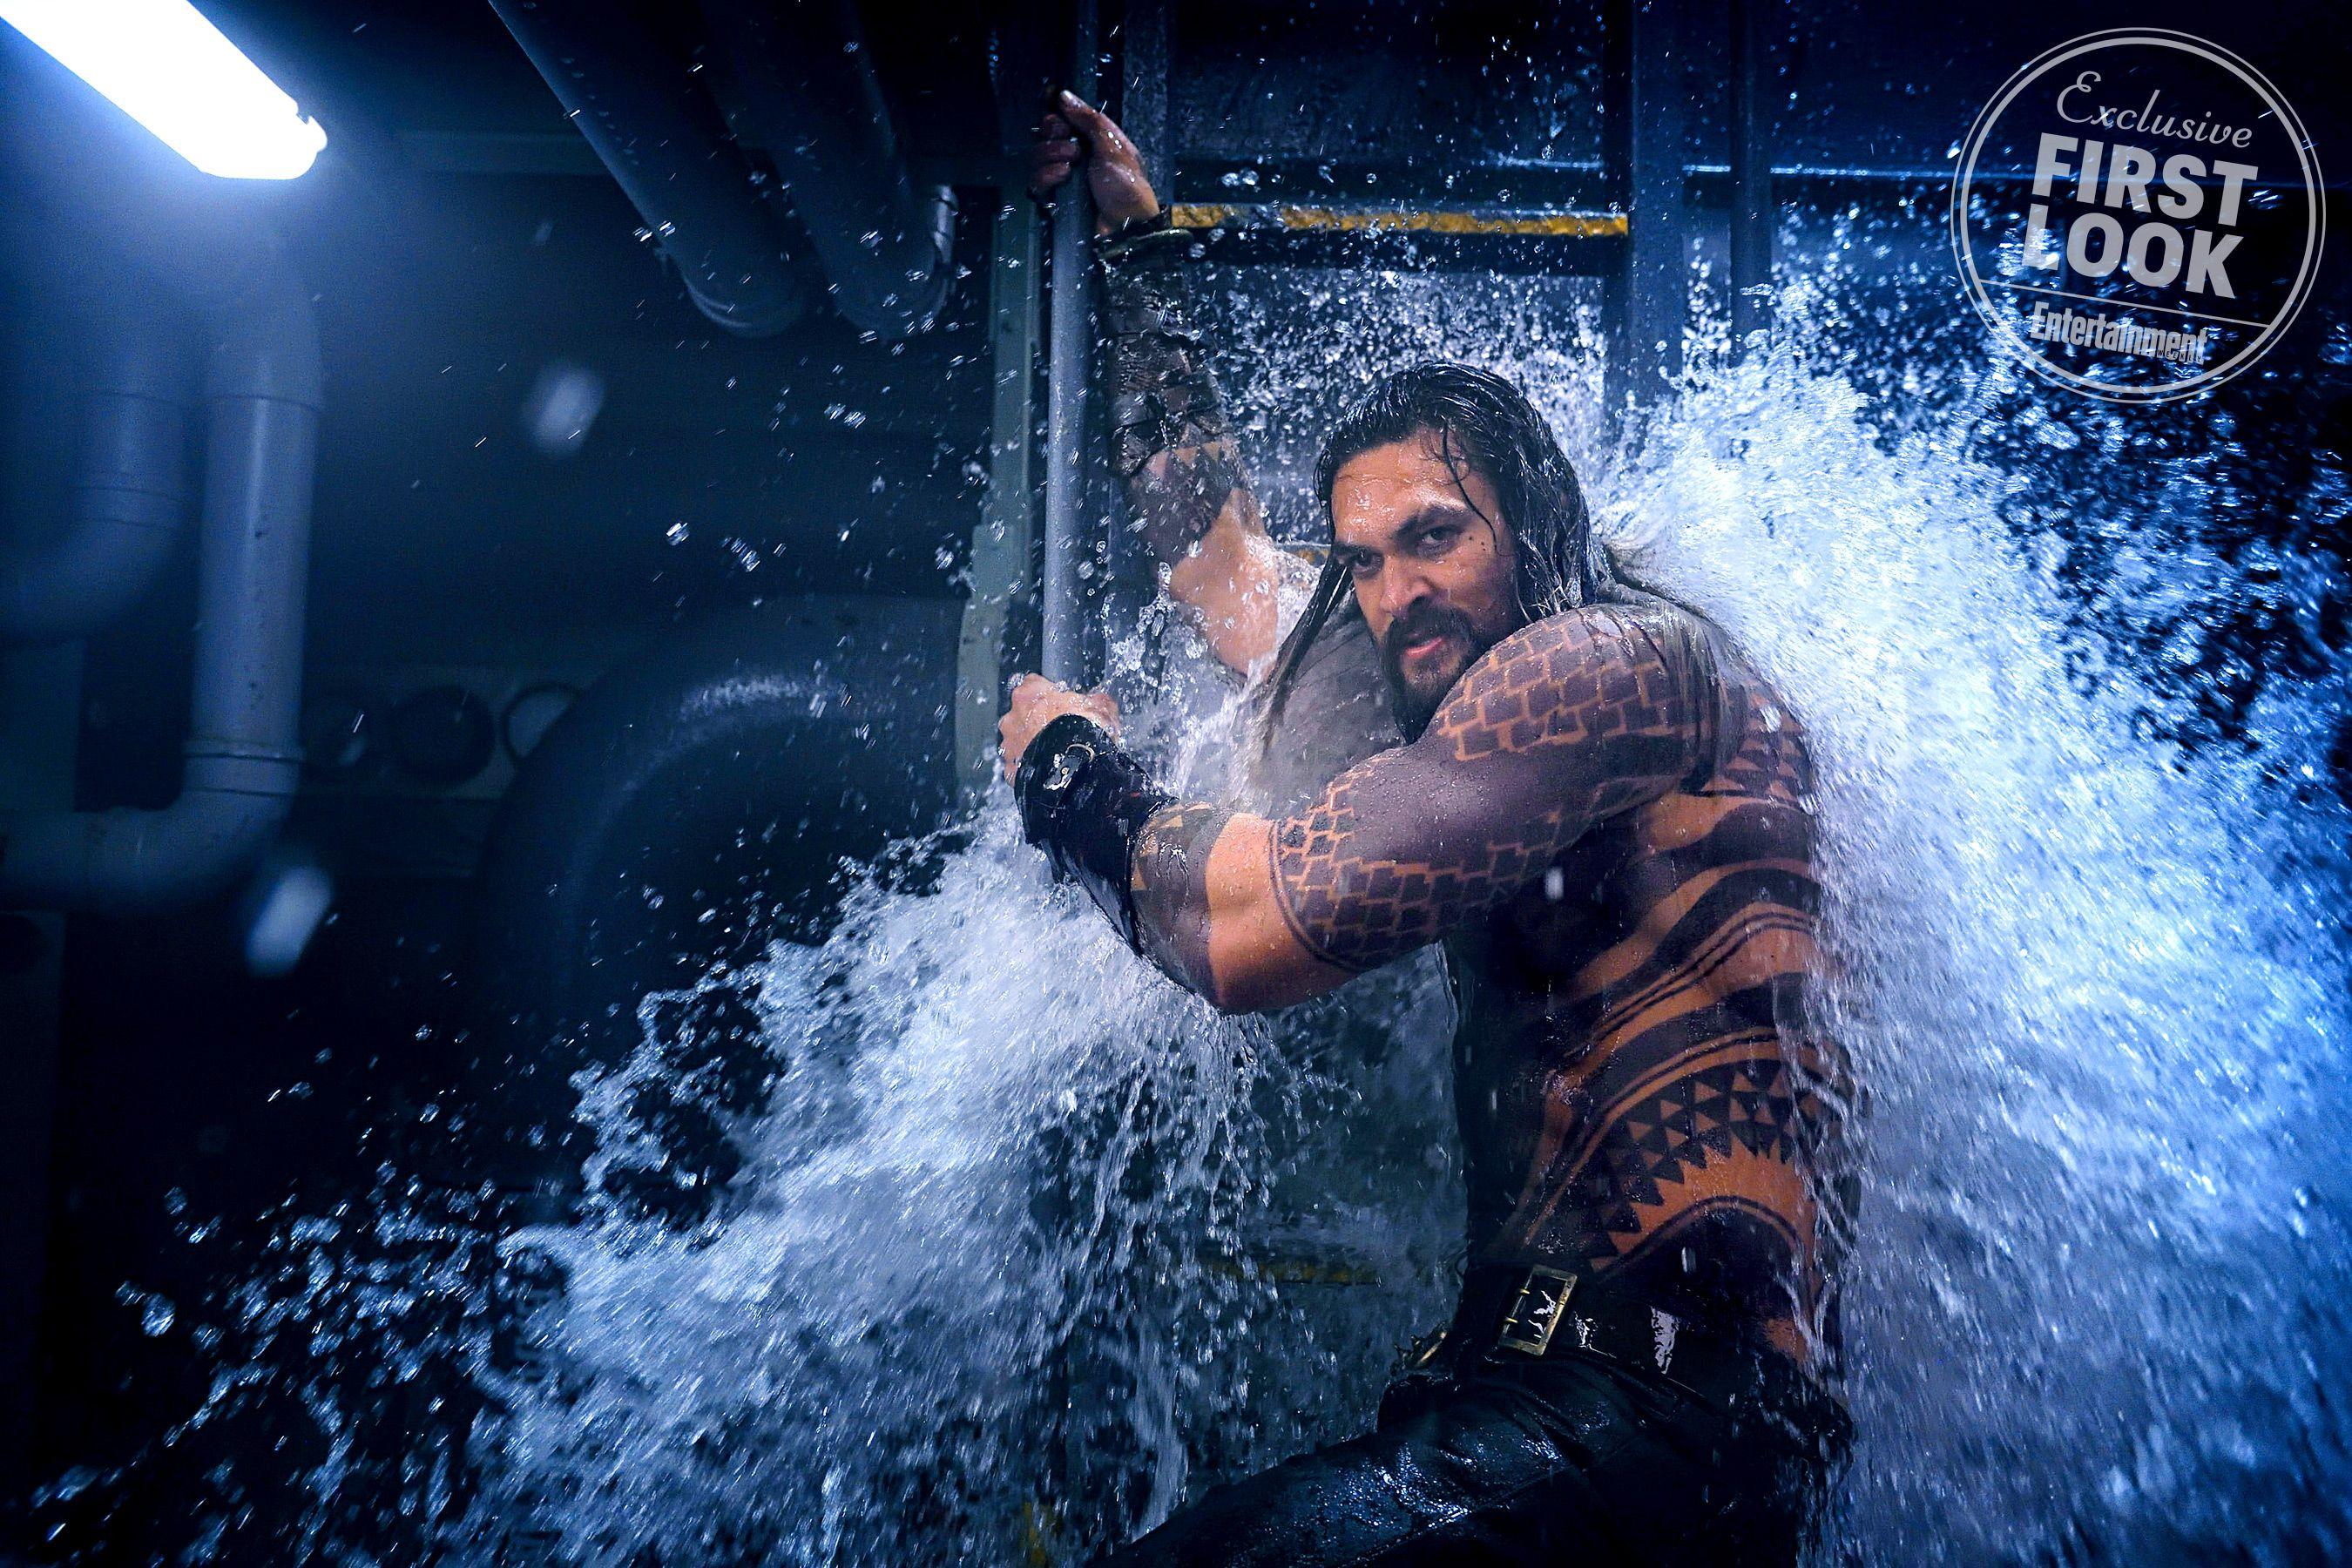 Aquaman: Exclusive photo reveal King Orm, Vulko, Mera, and more